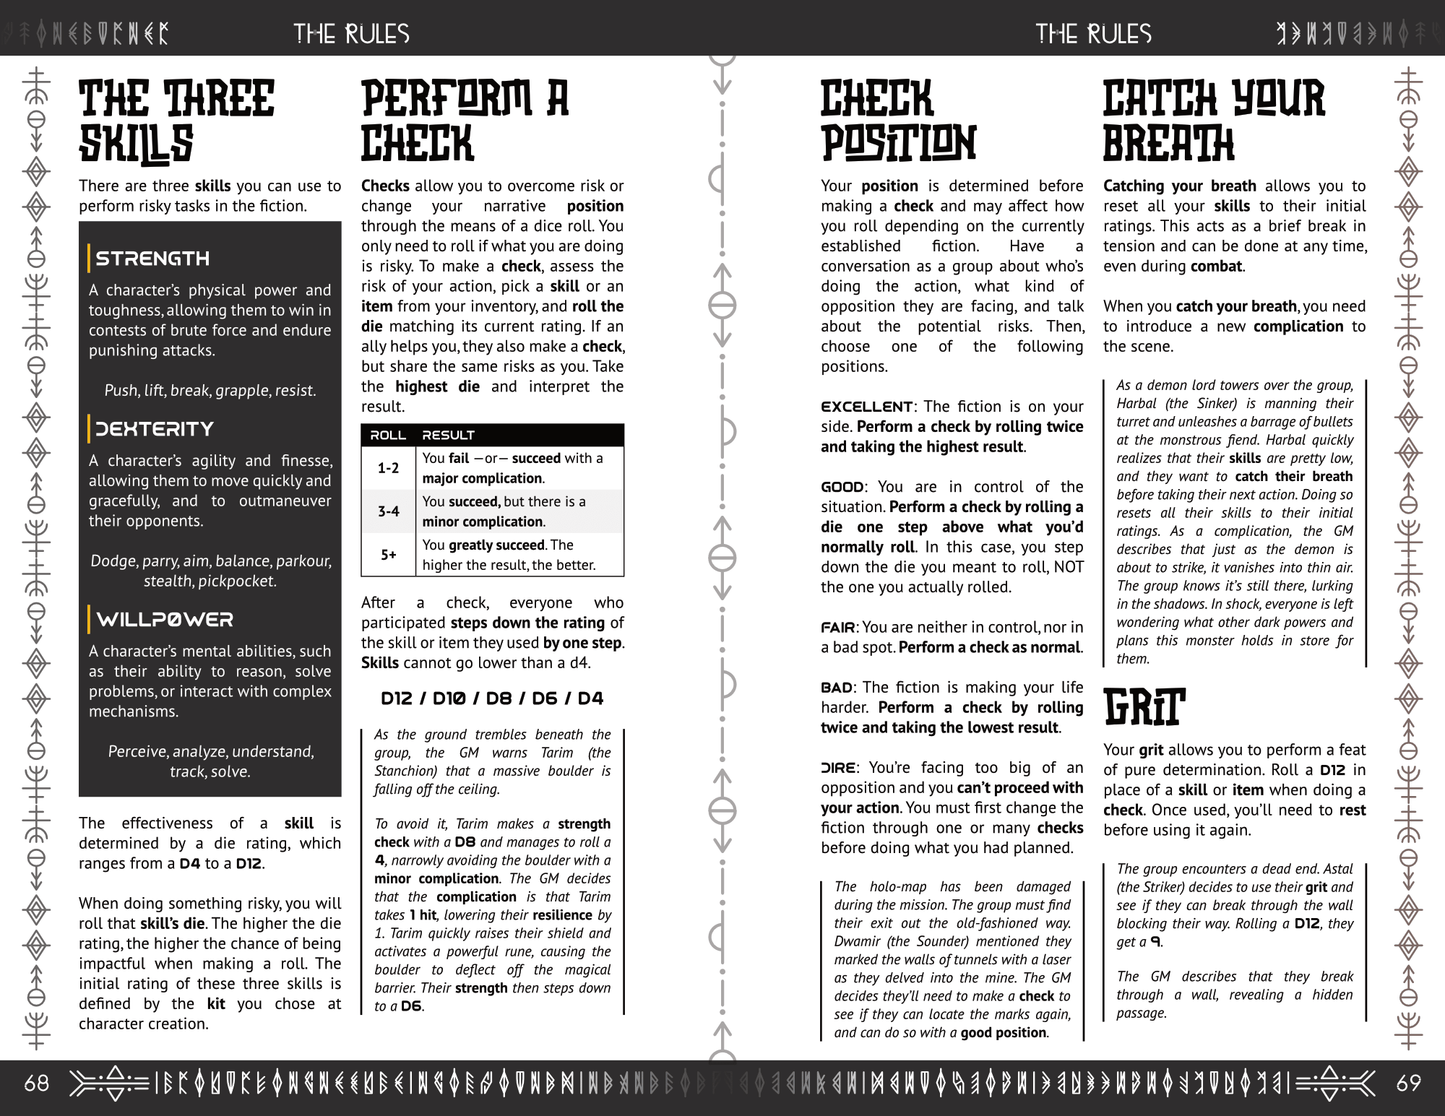 Stoneburner (Print + PDF)